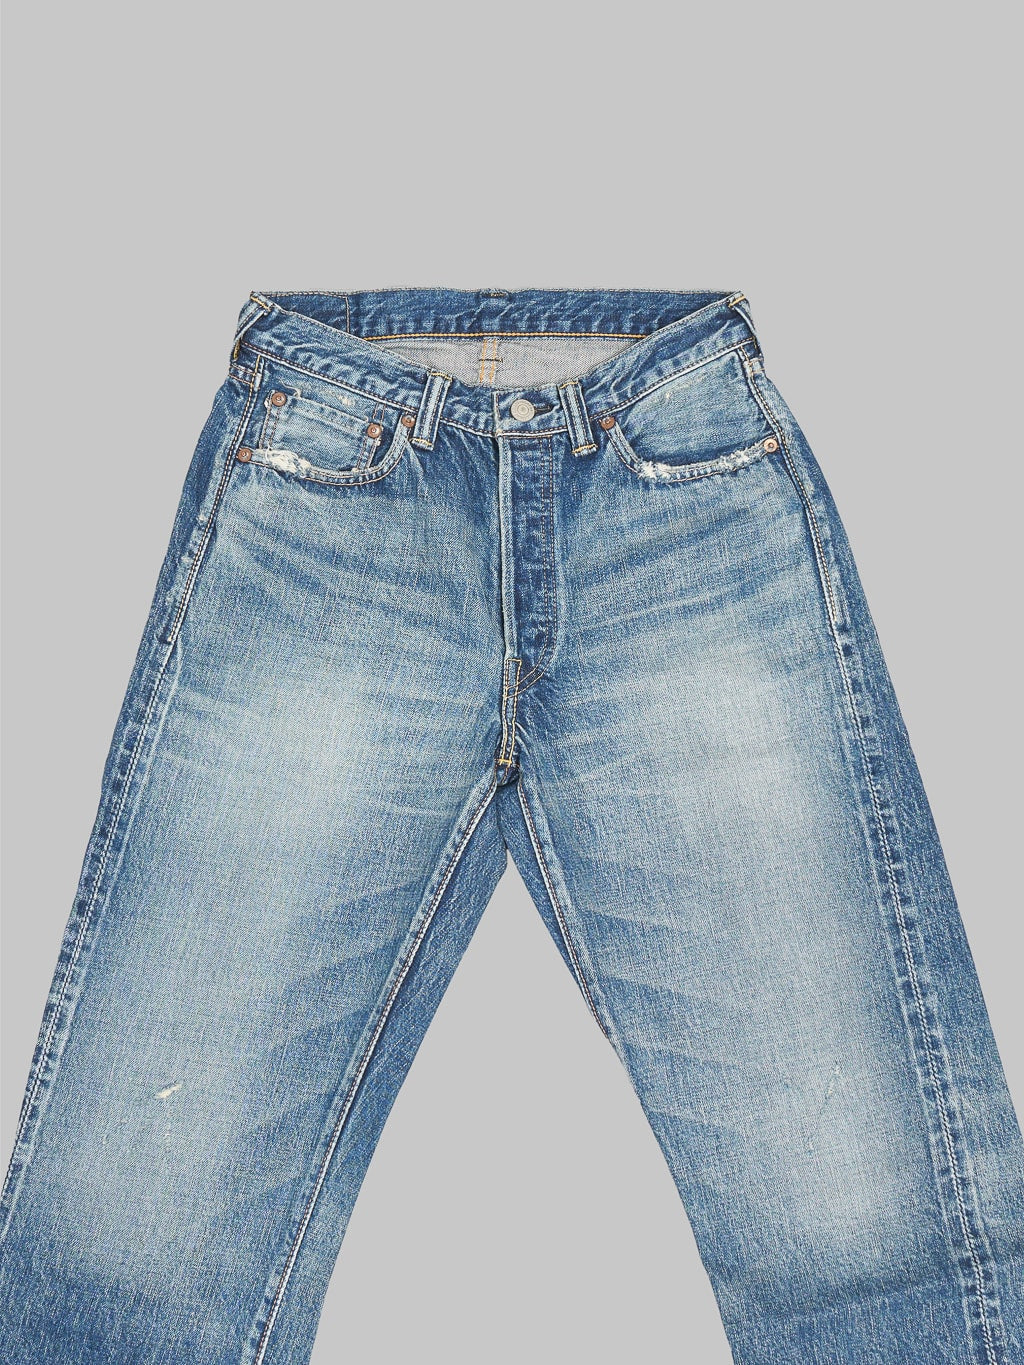 Fullcount 1108 Dartford Slim Straight Jeans high contrast fades